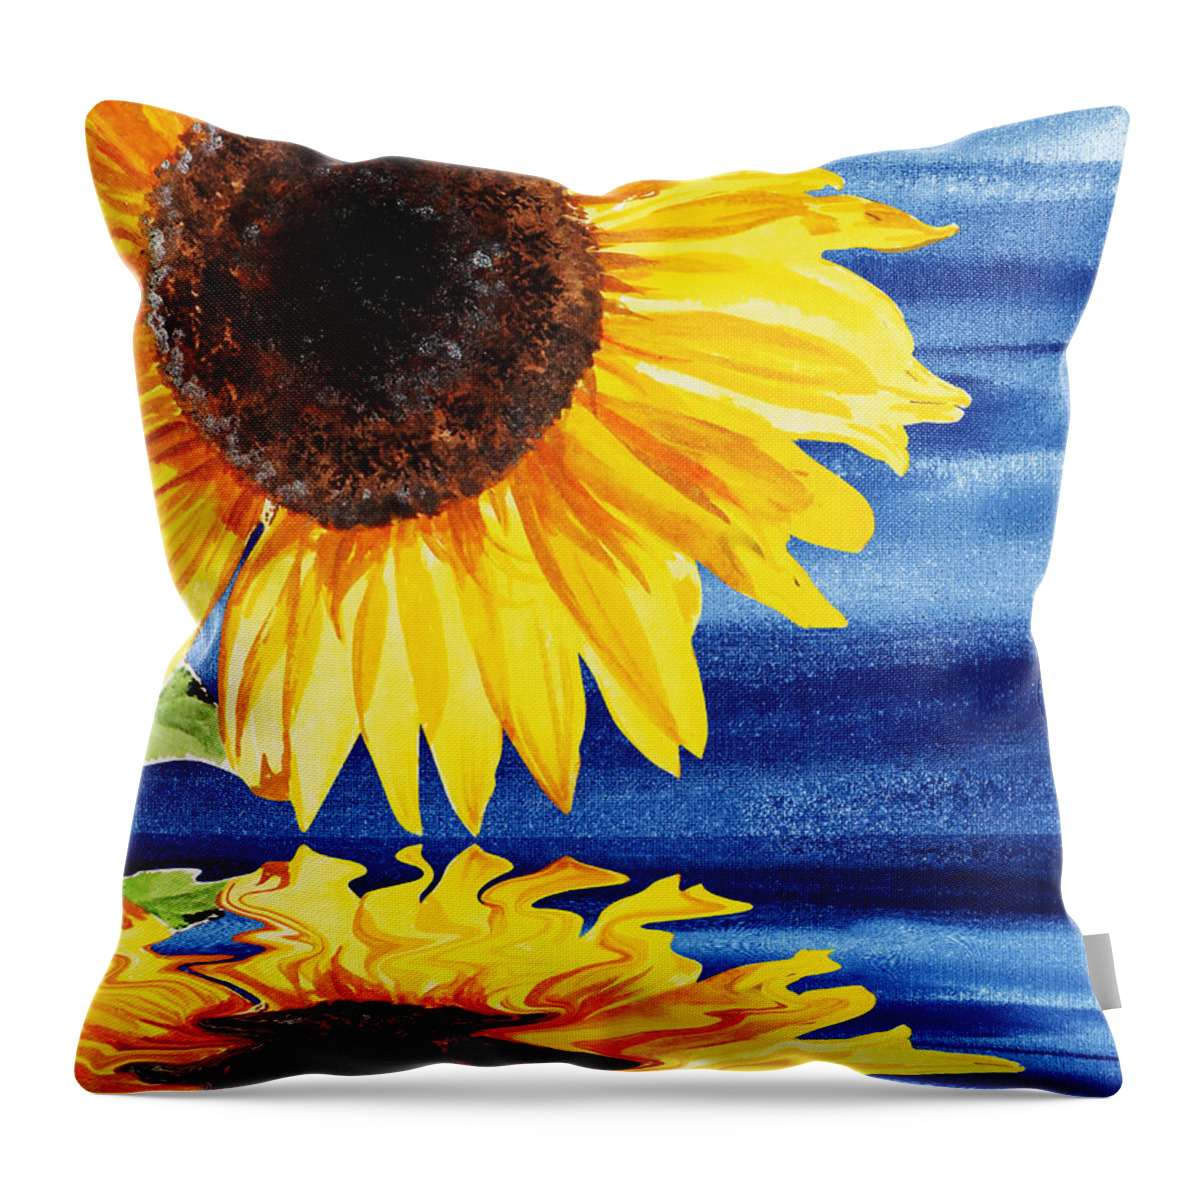 Sunflowers Throw Pillow featuring the painting Sunflower Reflection by Irina Sztukowski by Irina Sztukowski